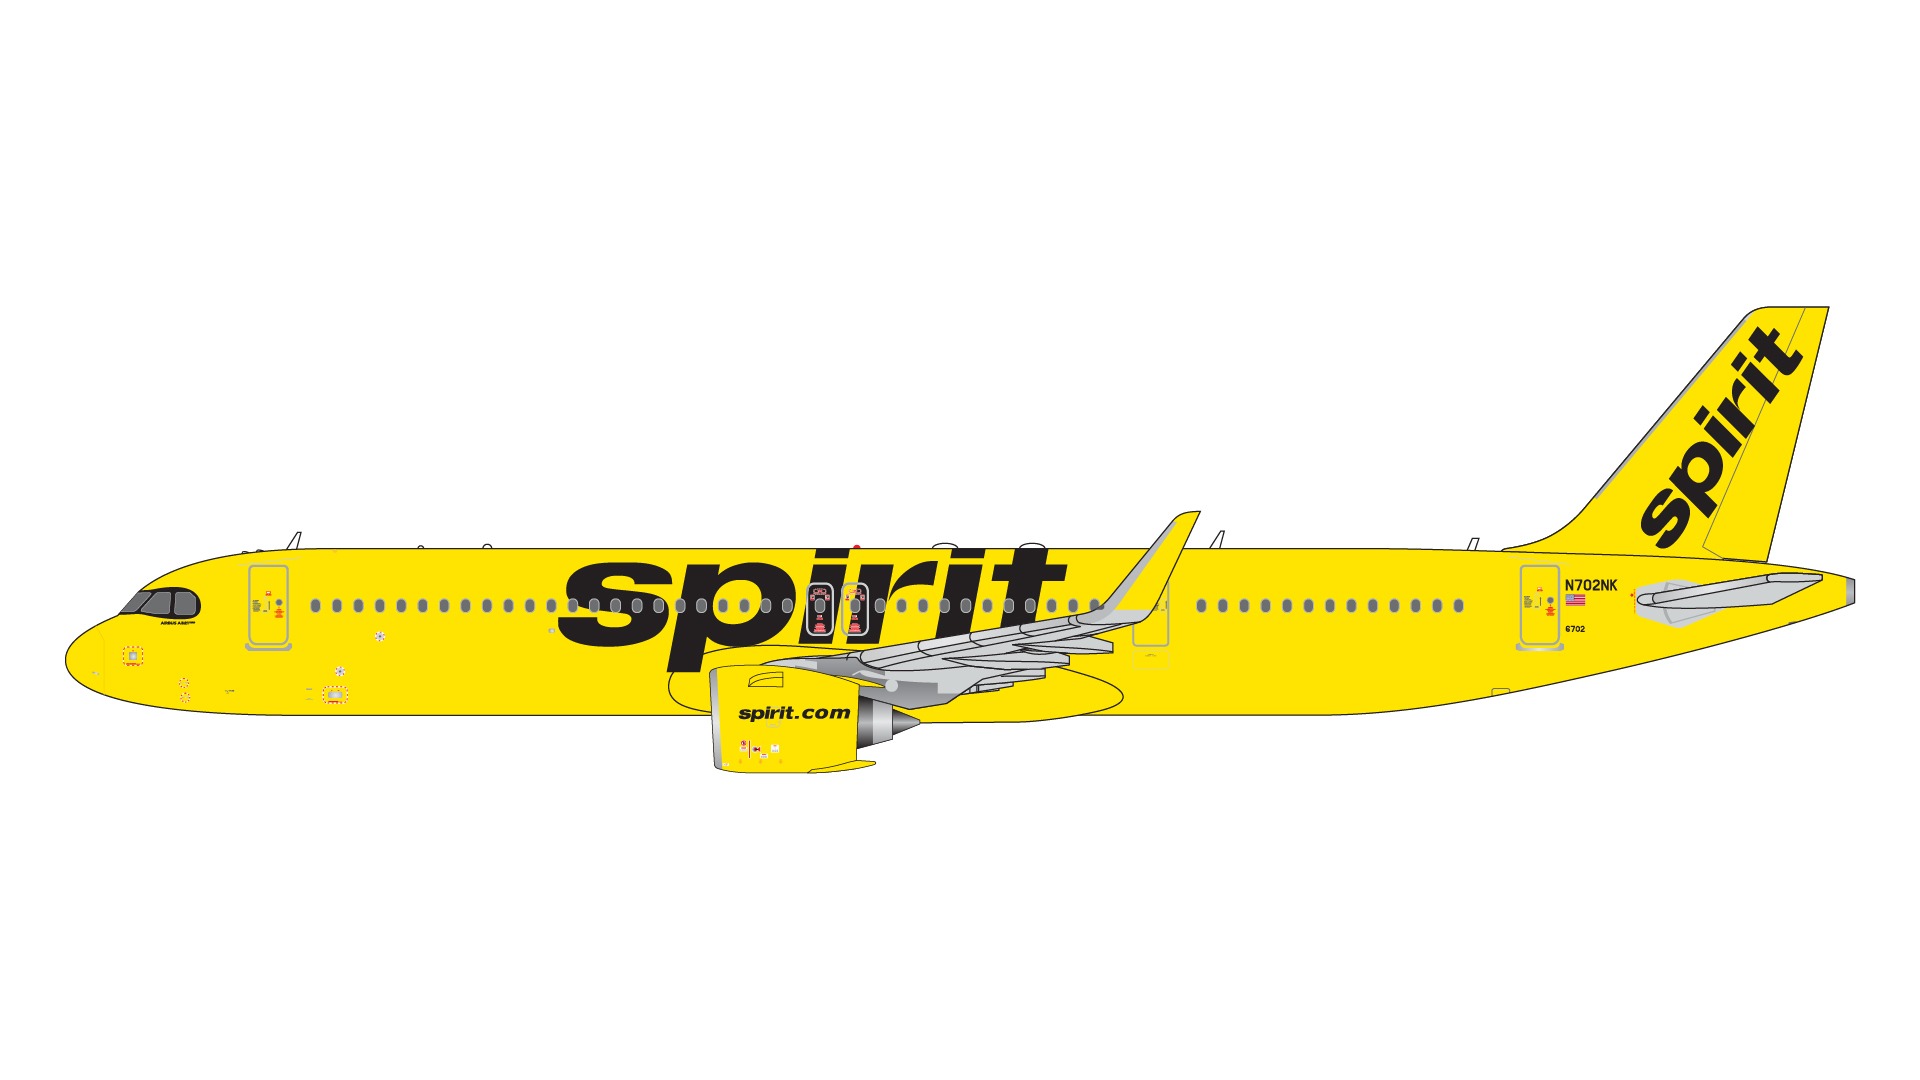 GJNKS2224 GEMINI JETS Spirit / スピリット航空/スピリッツ航空 A321neo N702NK 1:400